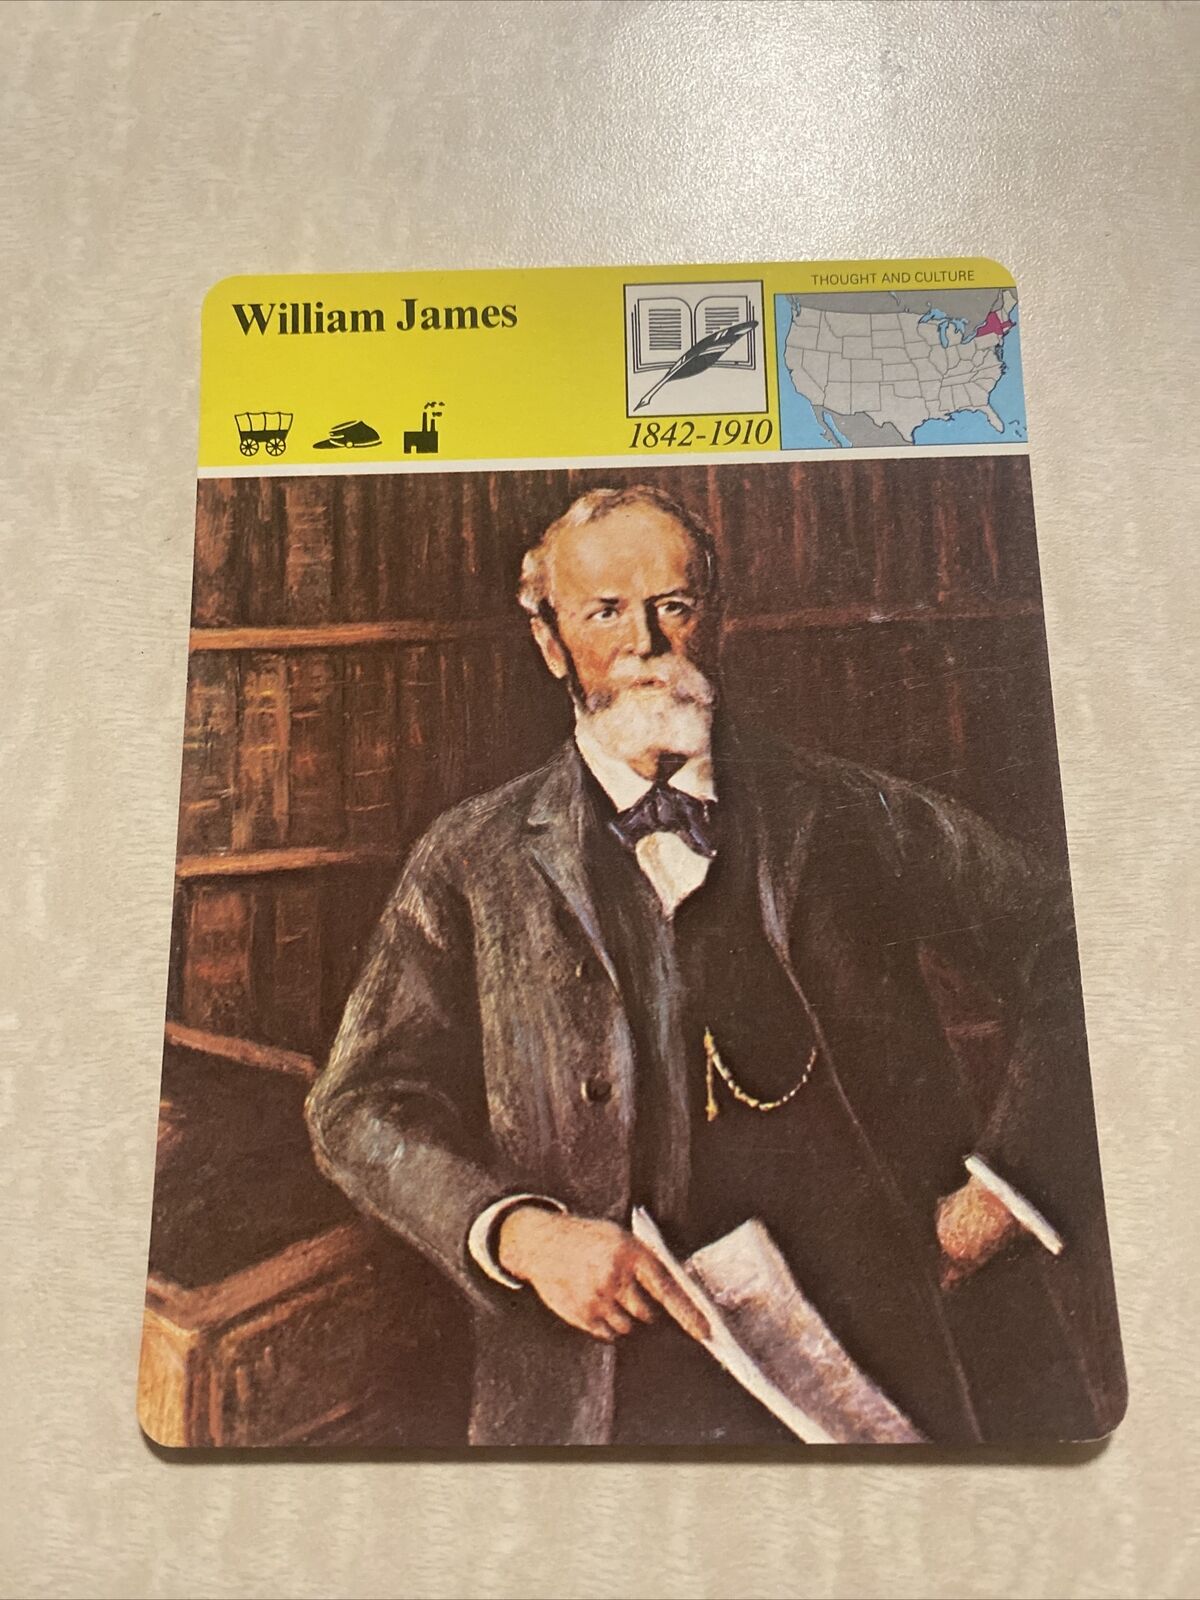 1981 panarizon william james card unlaminated